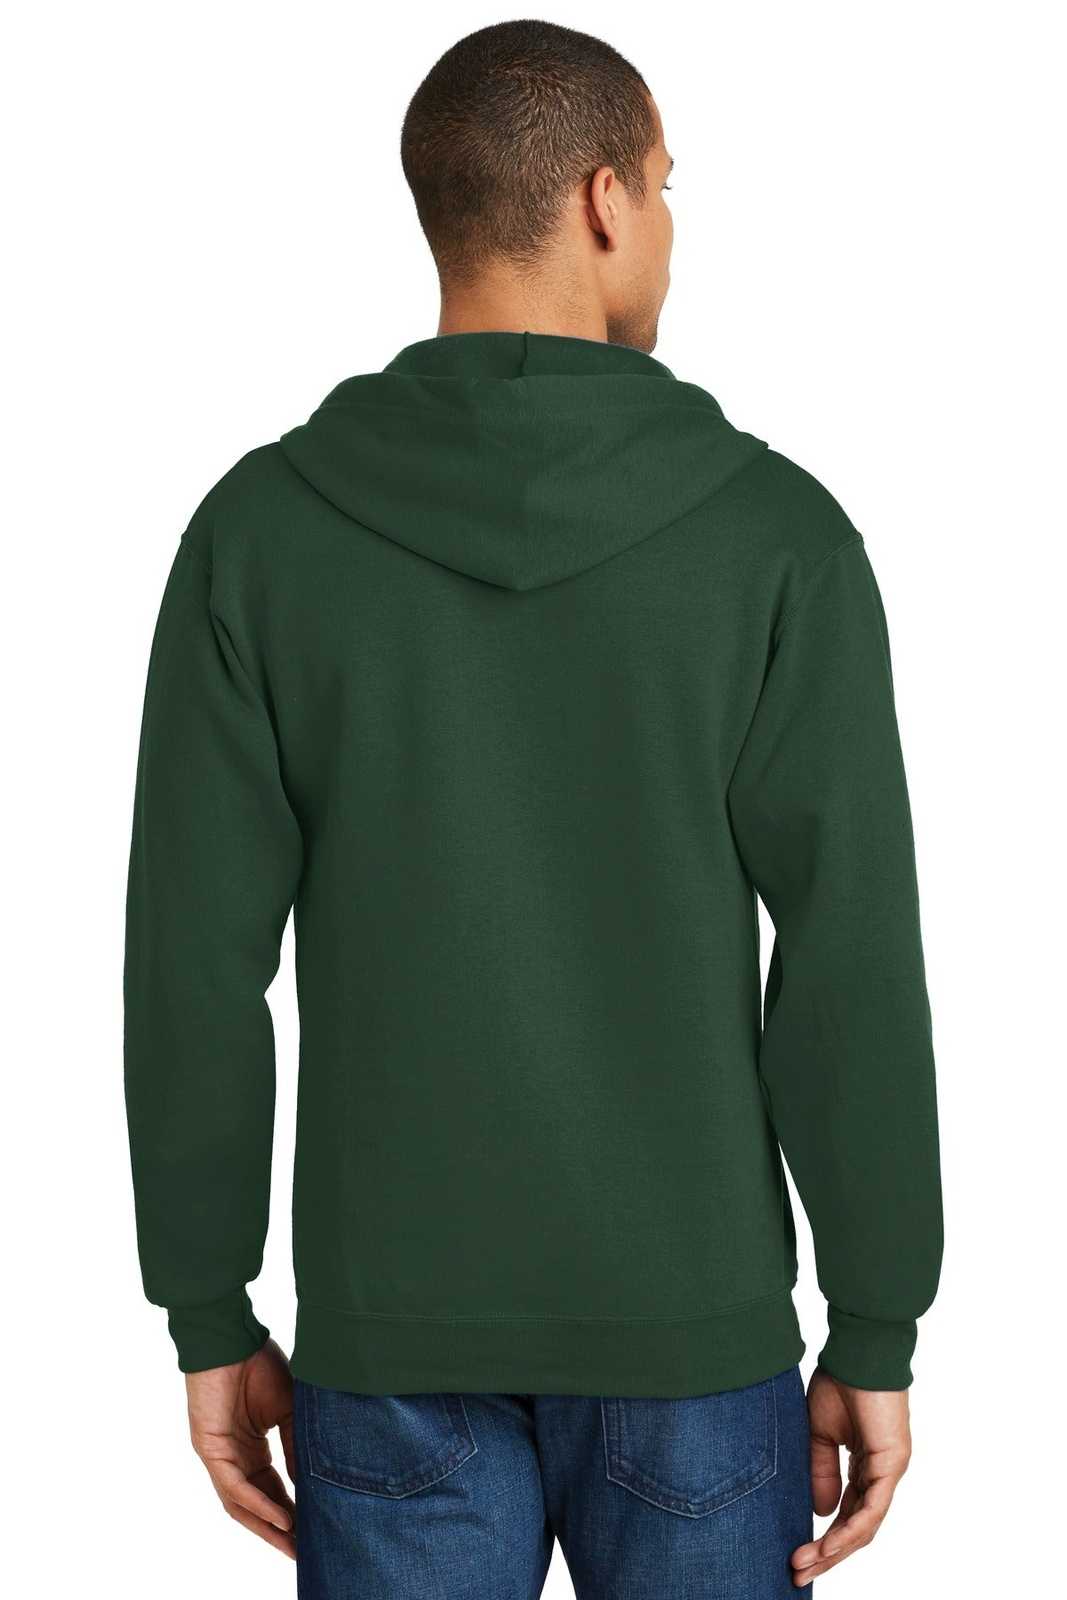 Jerzees 993M Nublend Full-Zip Hooded Sweatshirt - Forest Green - HIT a Double